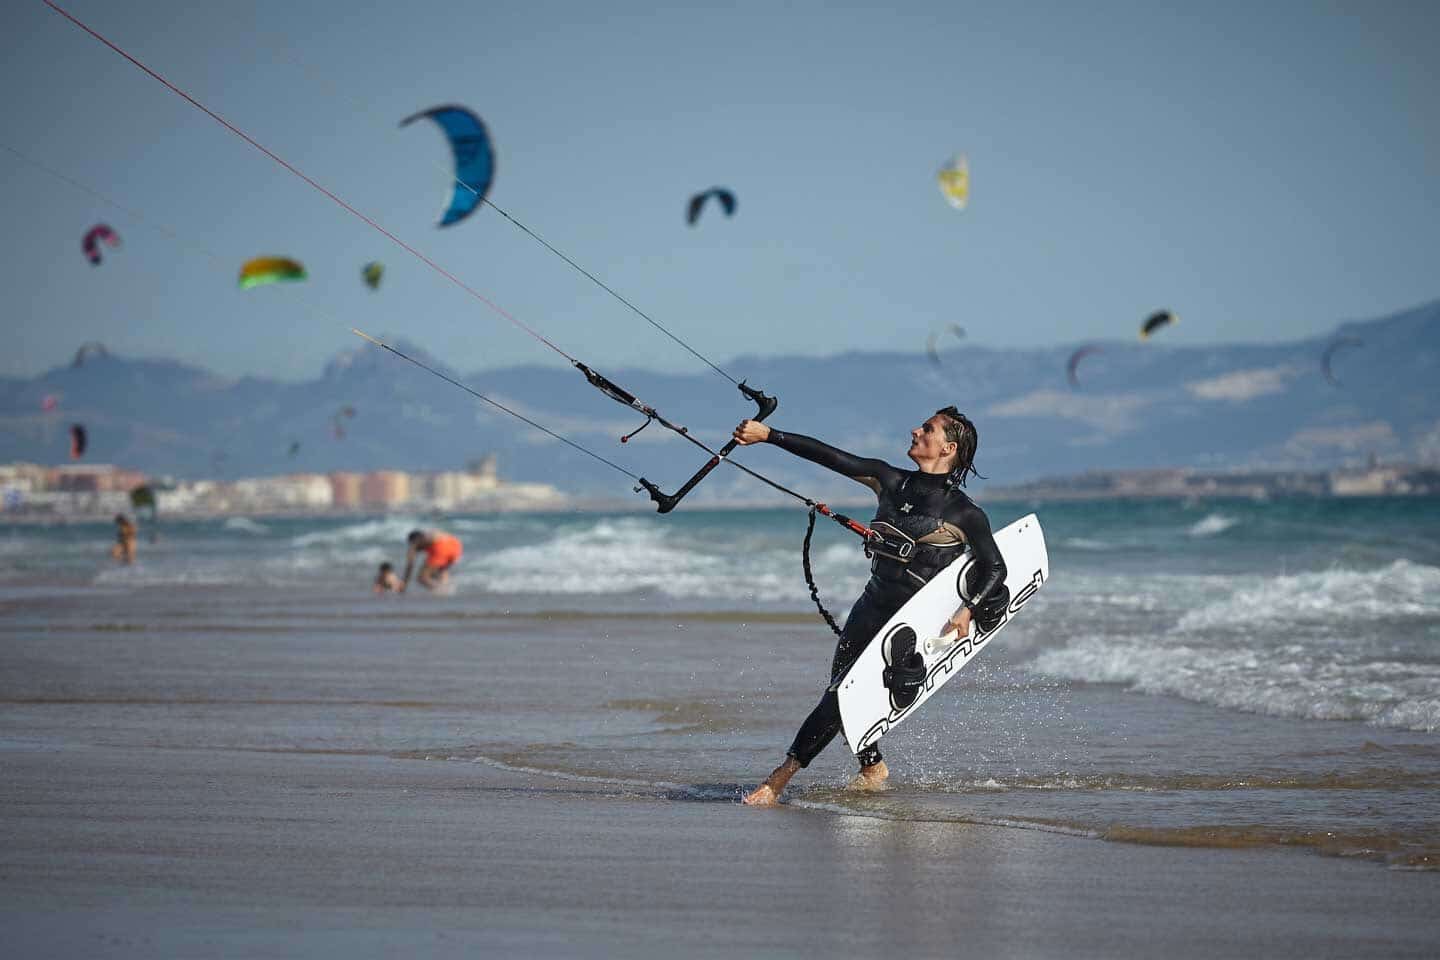 An active surfer kitesurfing in Tarifa, Spain